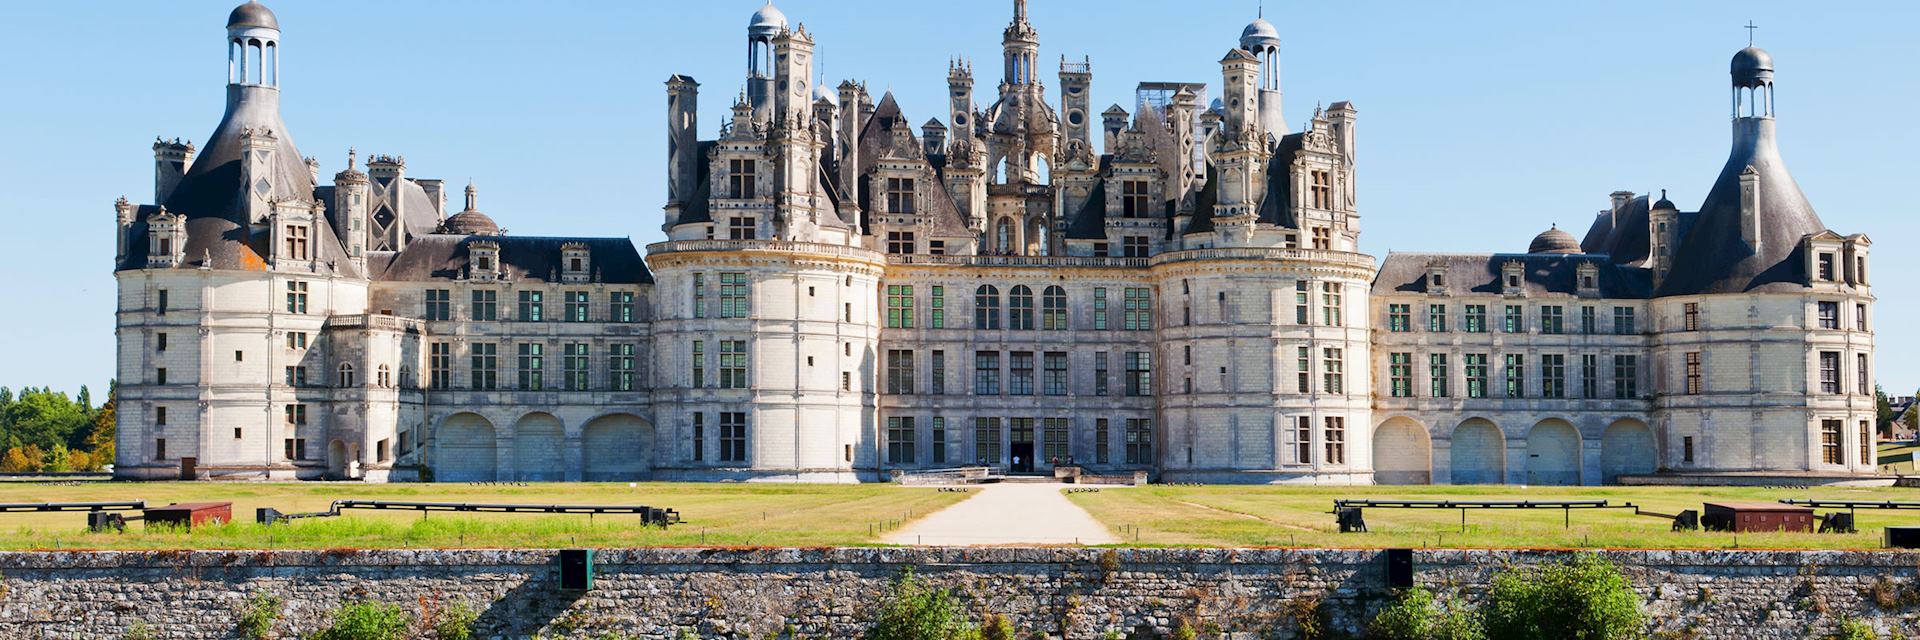 Interview with the famous Château de Chambord